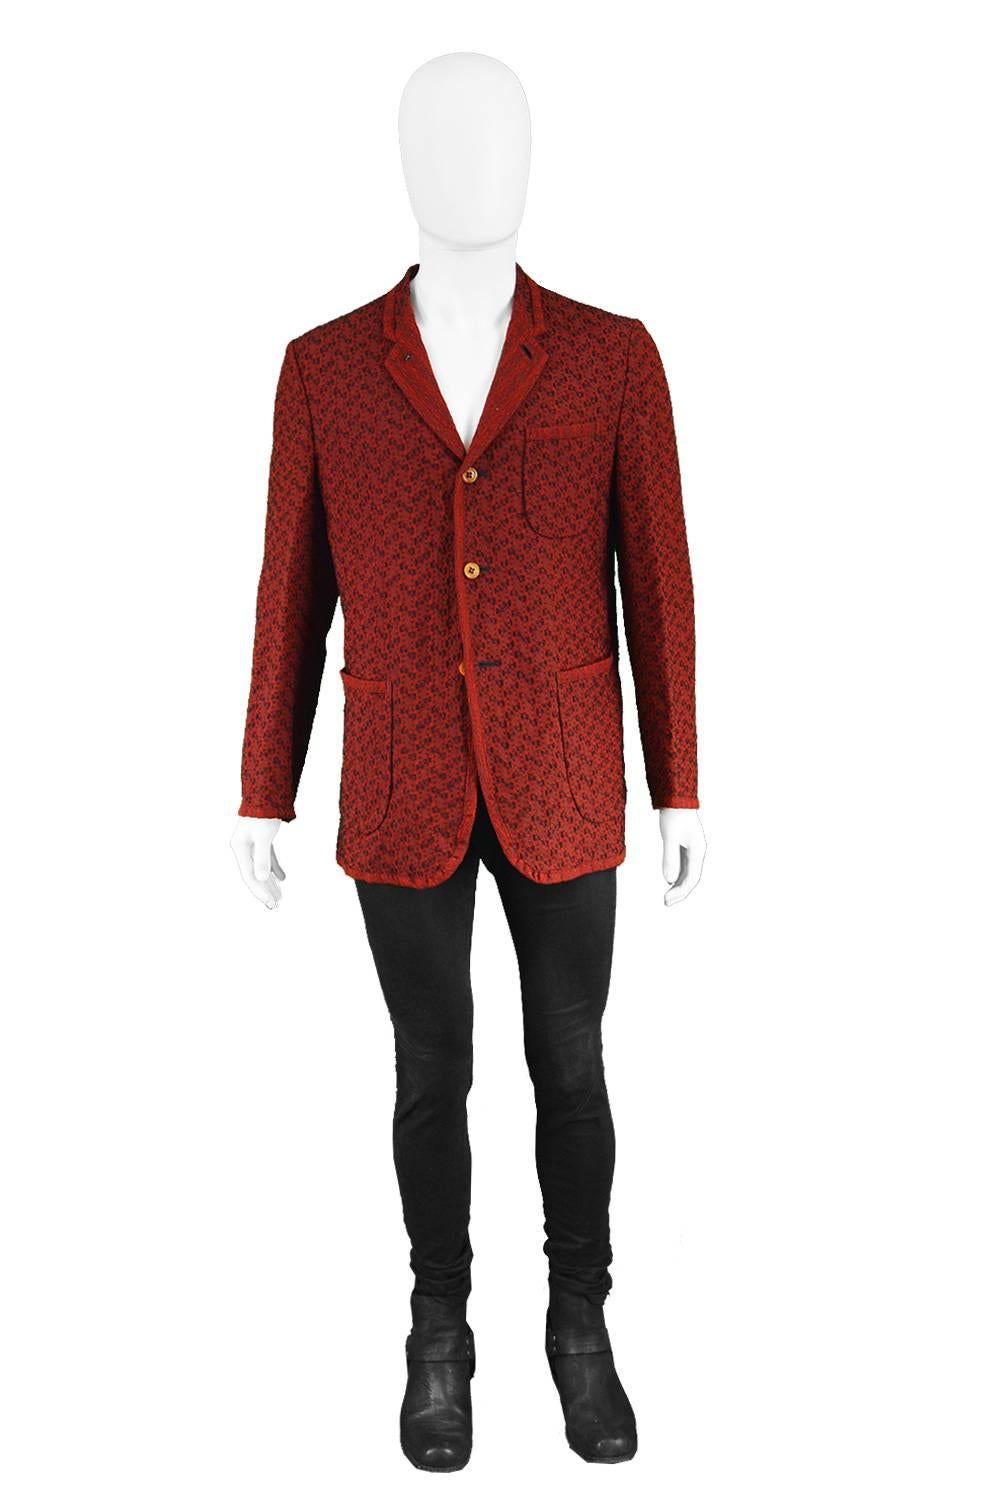 Comme Des Garcons Homme Plus Silk Wool Mohair Red Knit Mens Blazer Jacket

Size: Marked M. Please check measurements.
Chest - 40” / 101cm
Waist - 38” / 96cm
Length (Shoulder to Hem) - 29” / 73cm
Shoulder to Shoulder - 18” / 46cm
Sleeve Pit to Cuff -